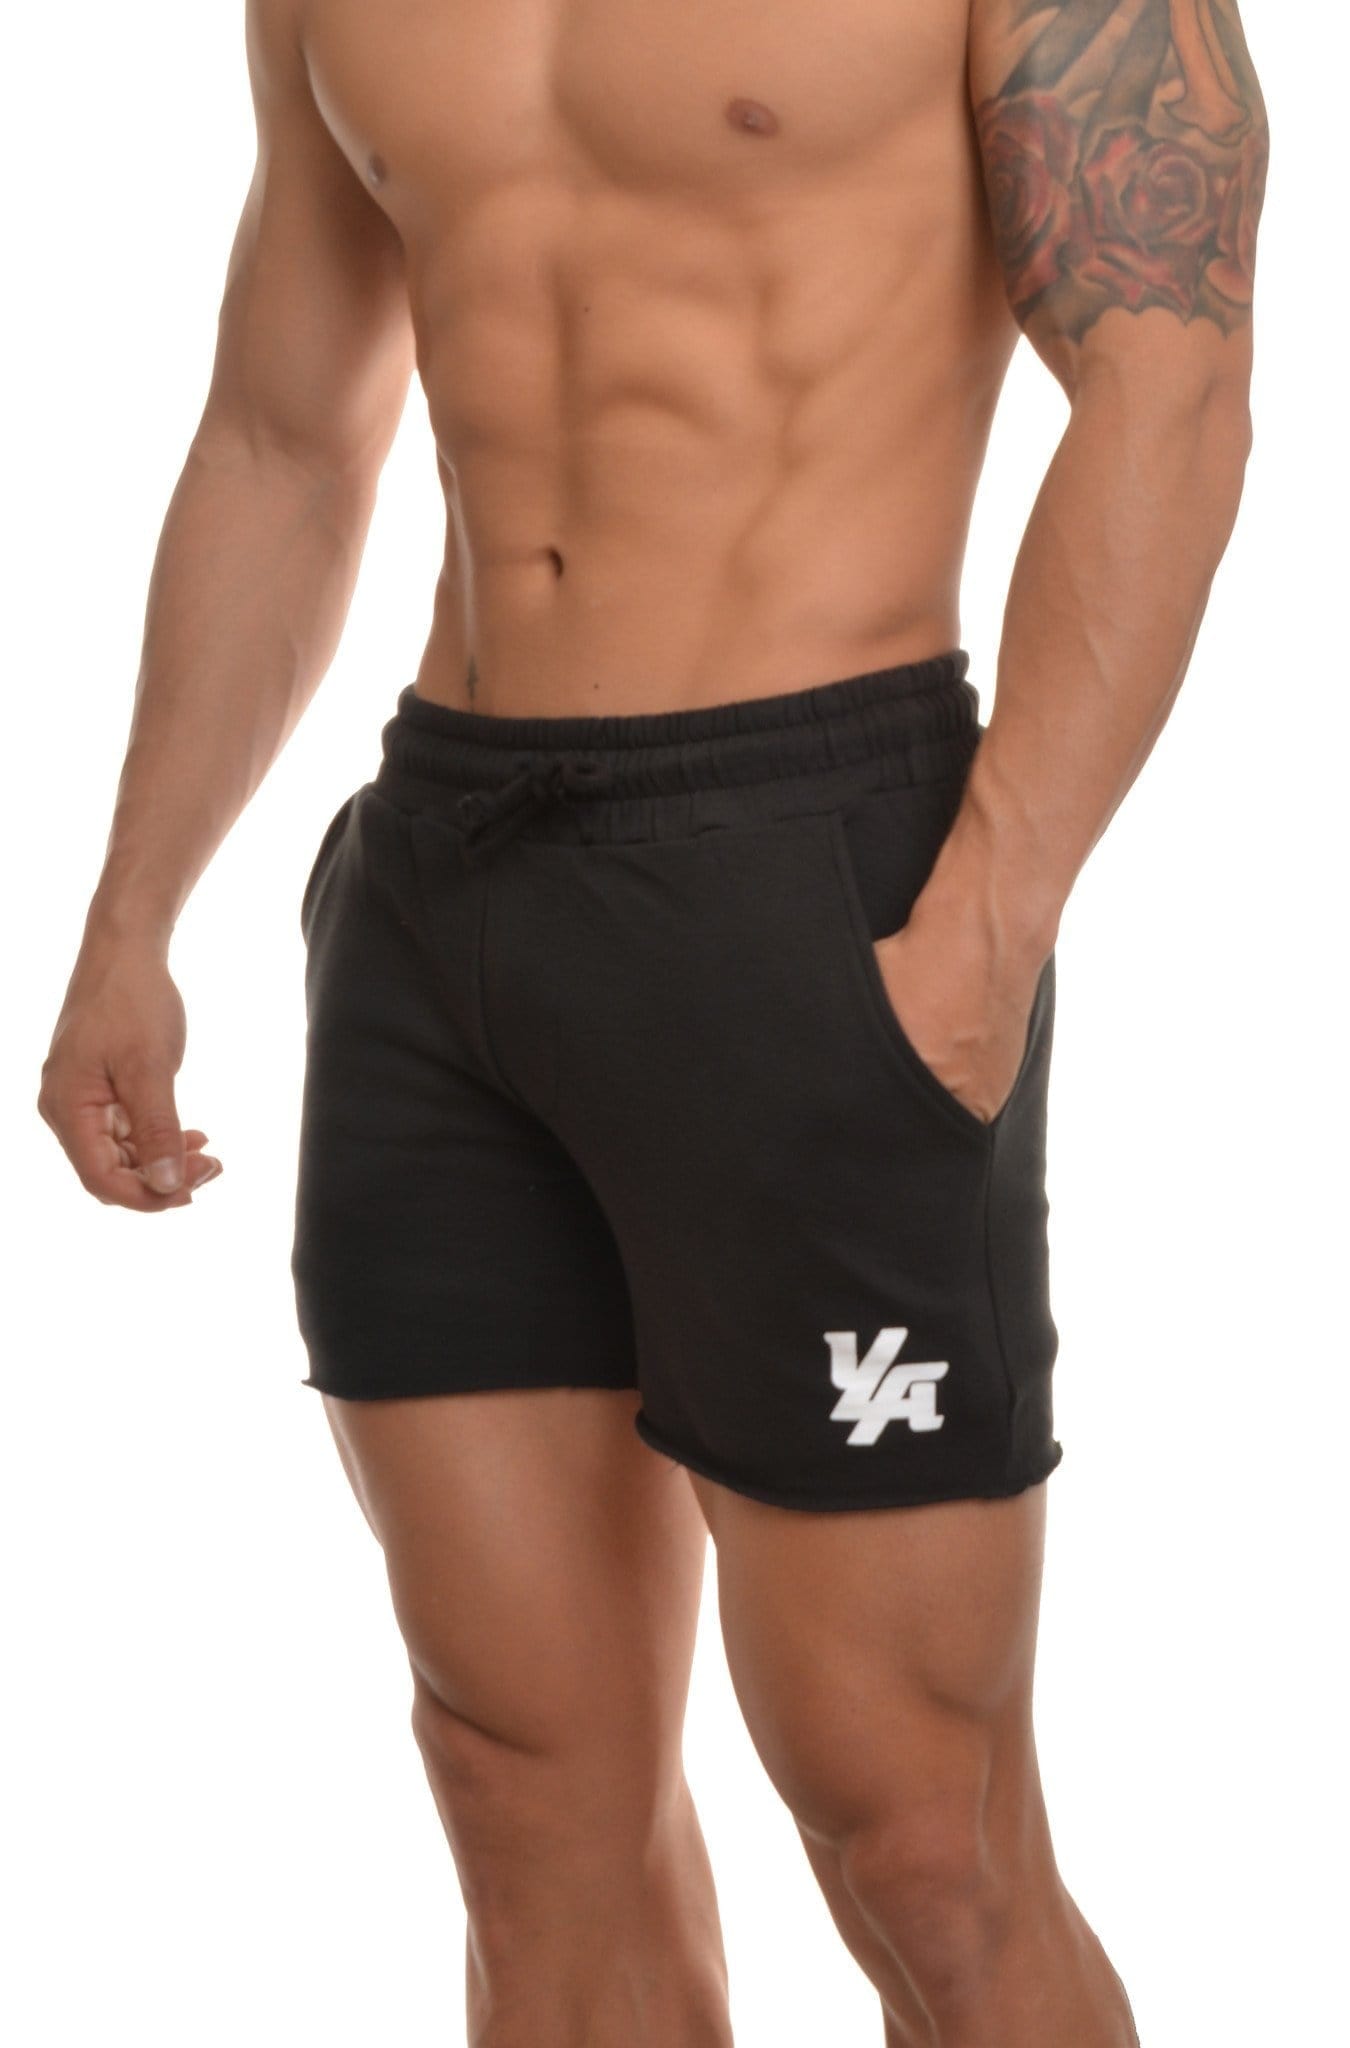 Mens Gym Shorts Black Bodybuilding w/ Pockets Athletic Cotton Workout